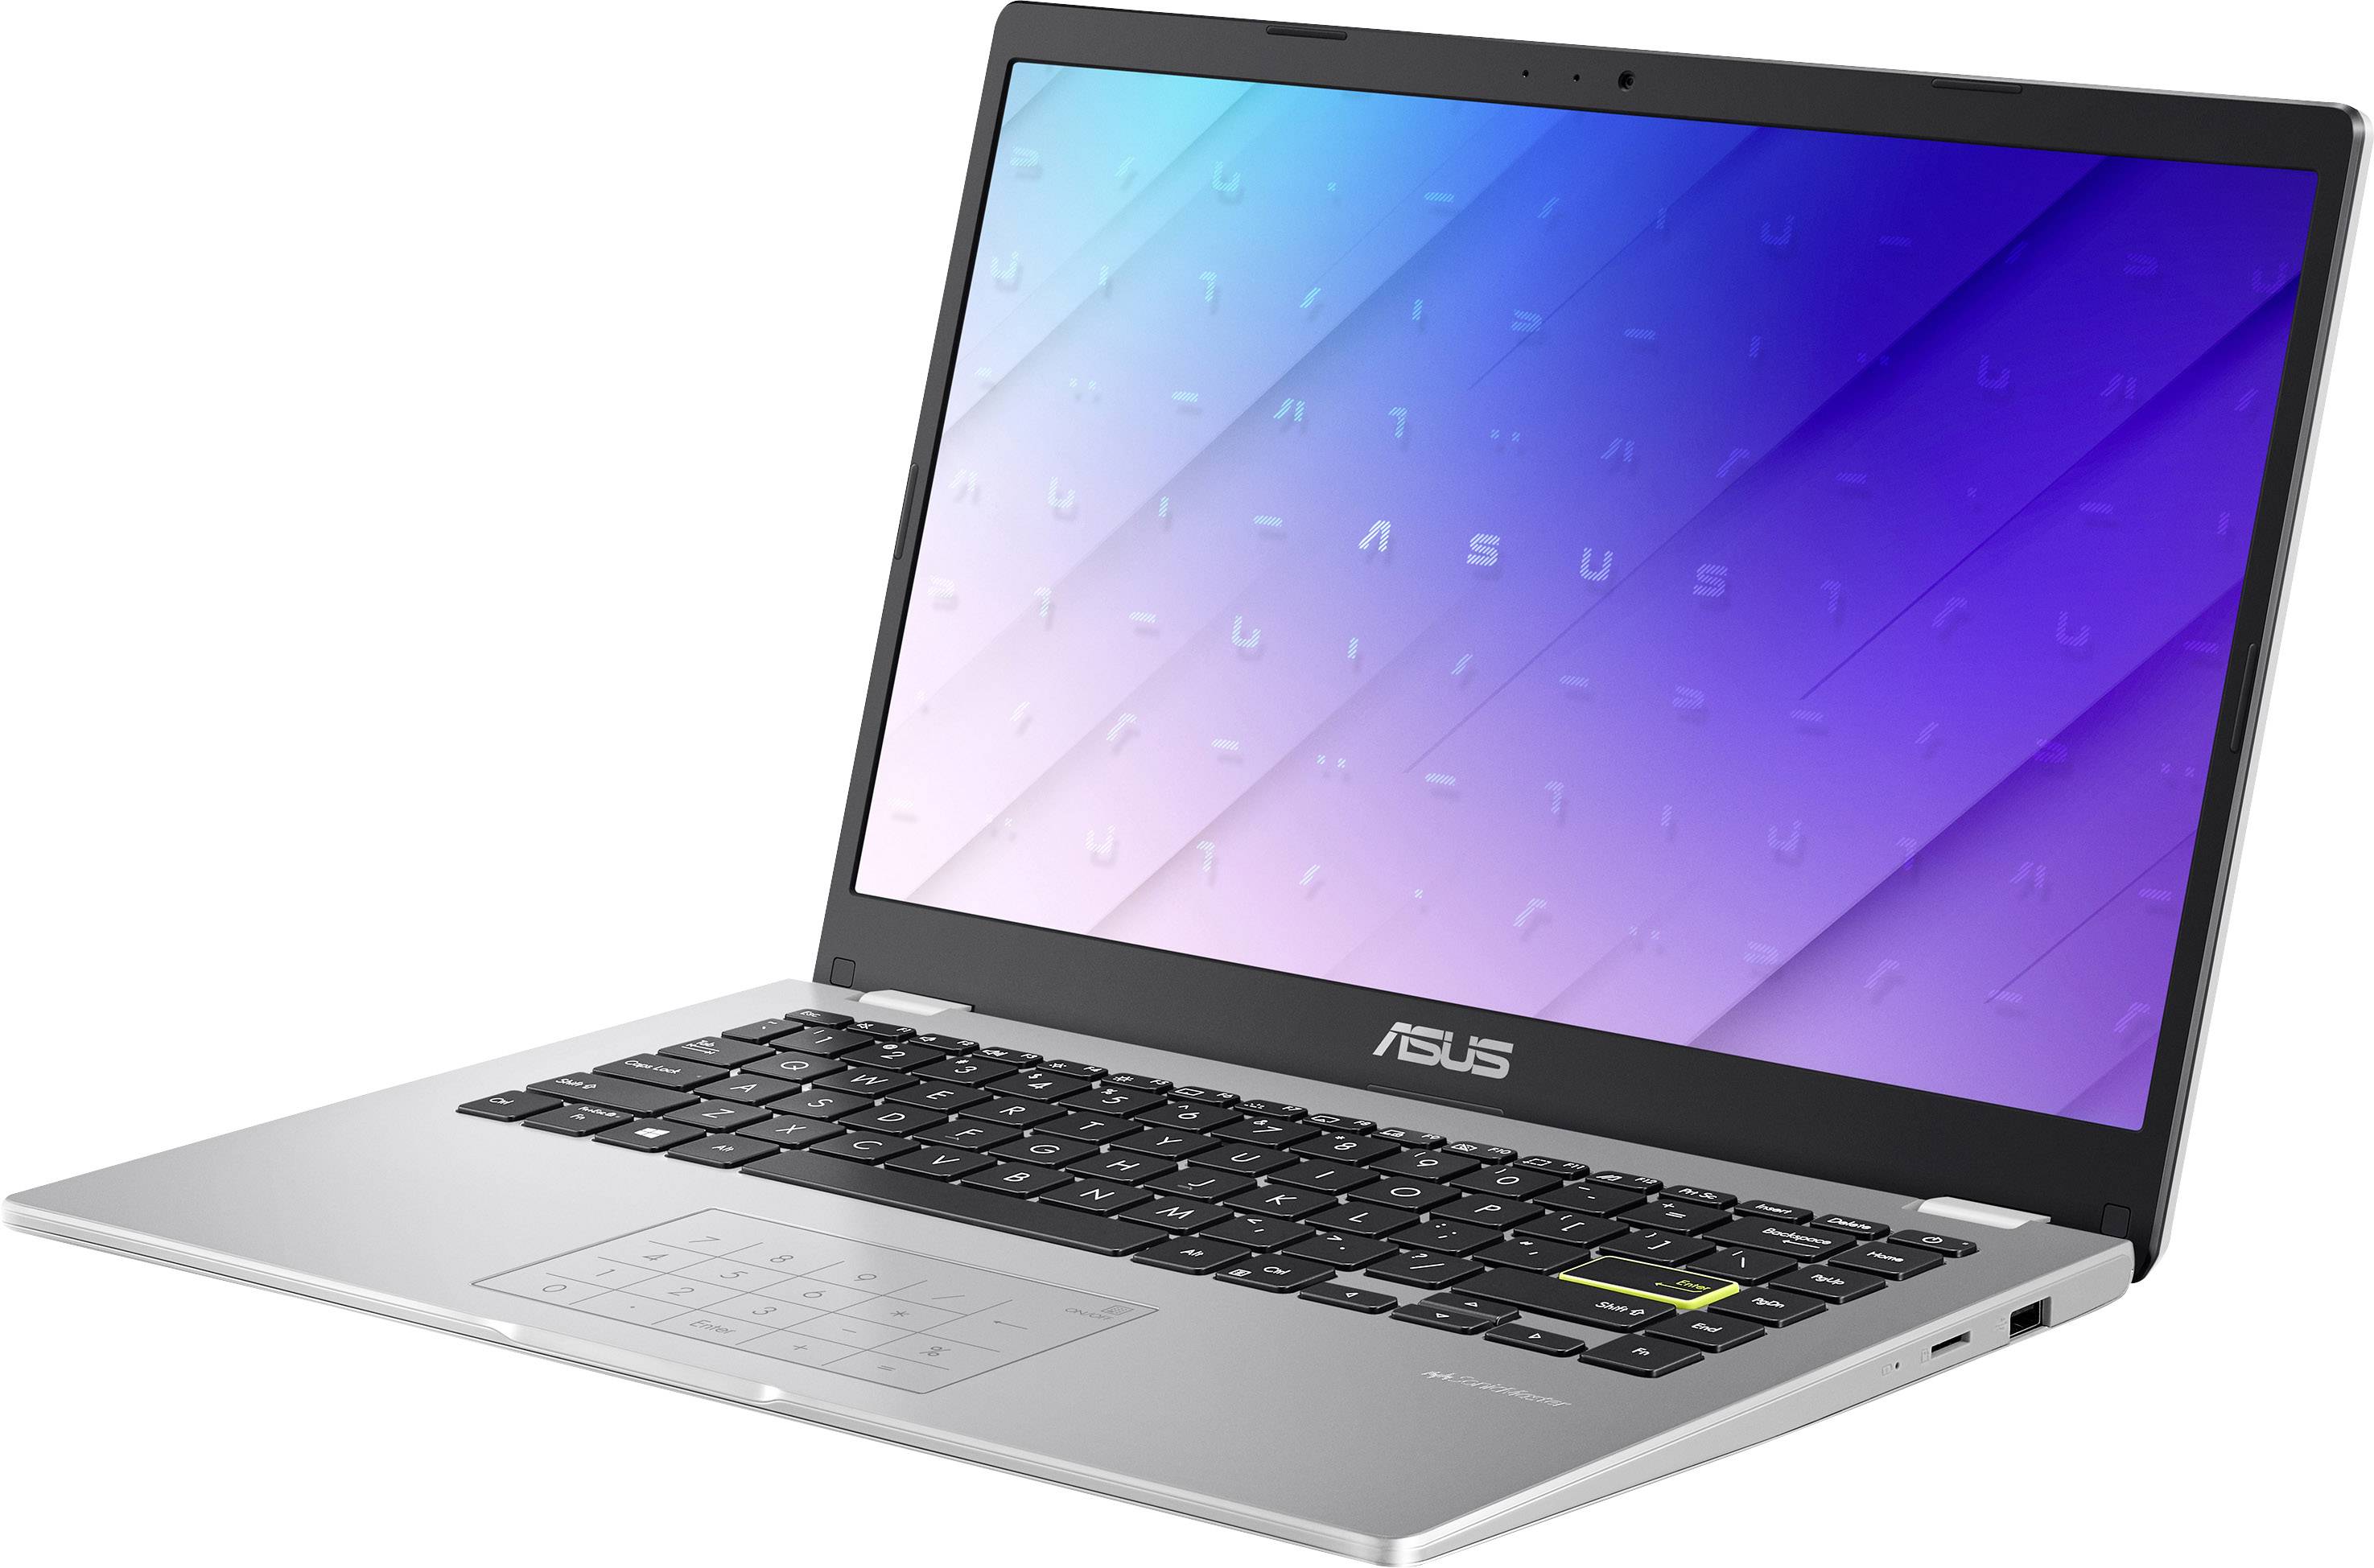 Asus Vivobook 14 E410ma 356 Cm 14 Inch Full Hd Laptop Intel® Pentium® Silver N5030 8 Gb Ram 6566